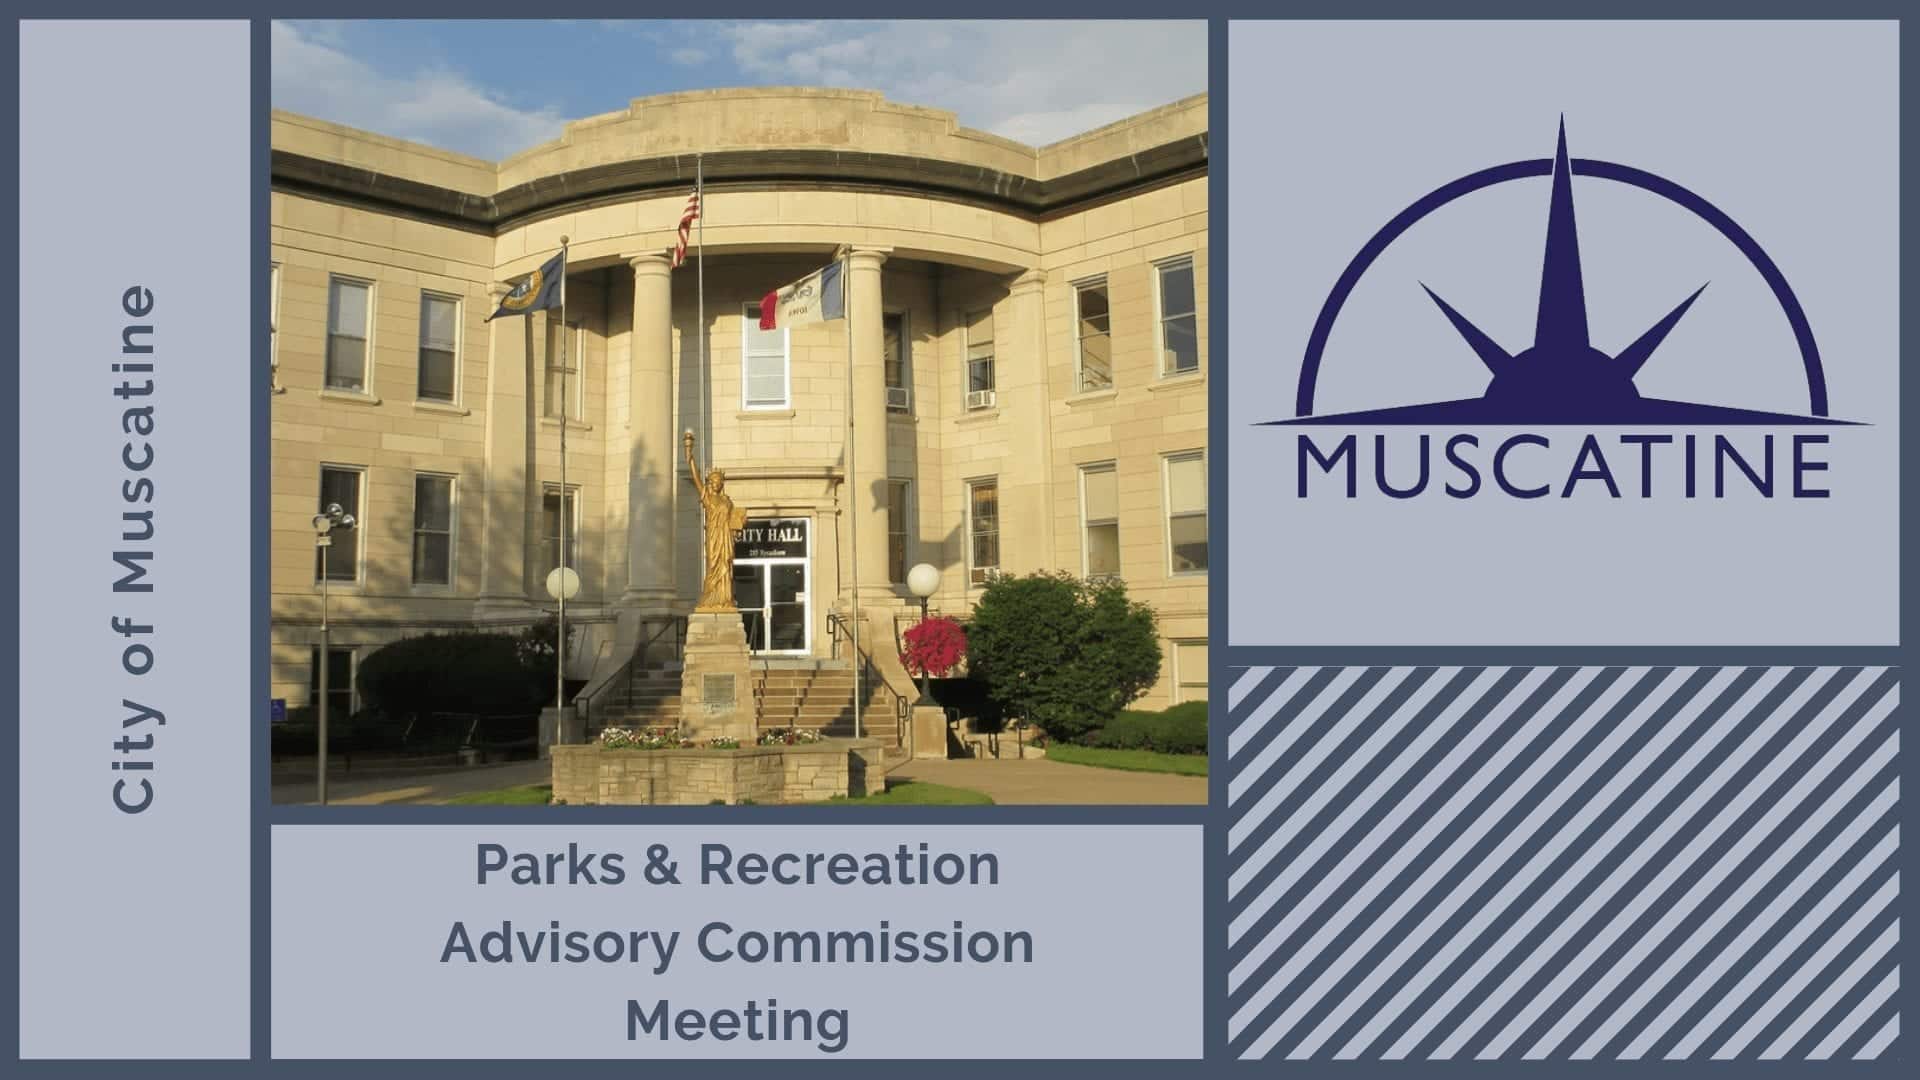 Parks & Recreation Advisory Commission